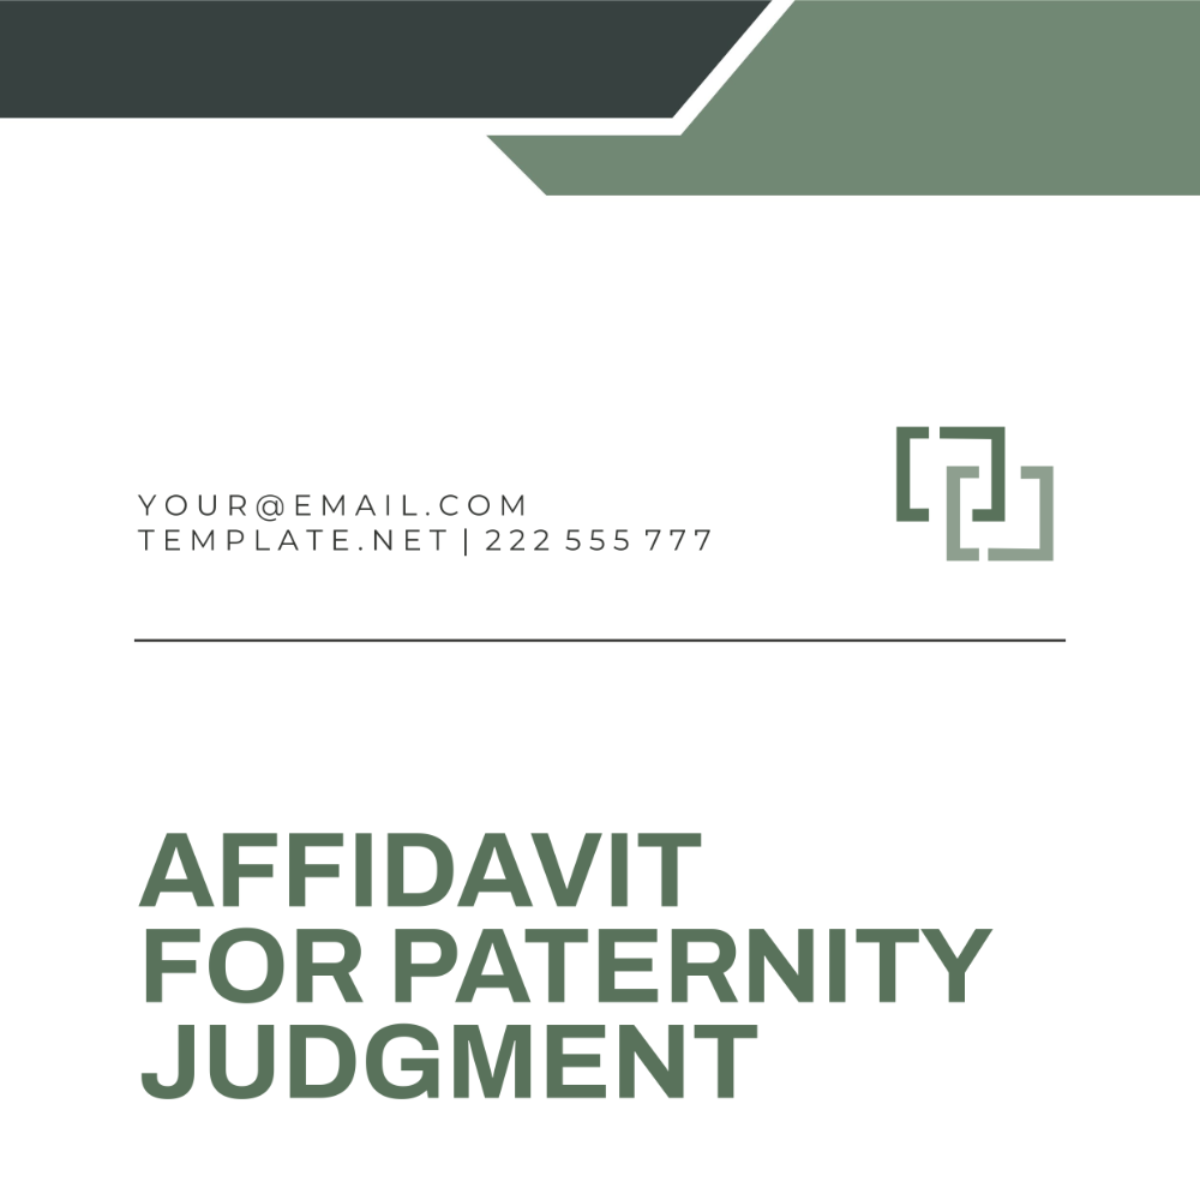 Affidavit For Paternity Judgment Template